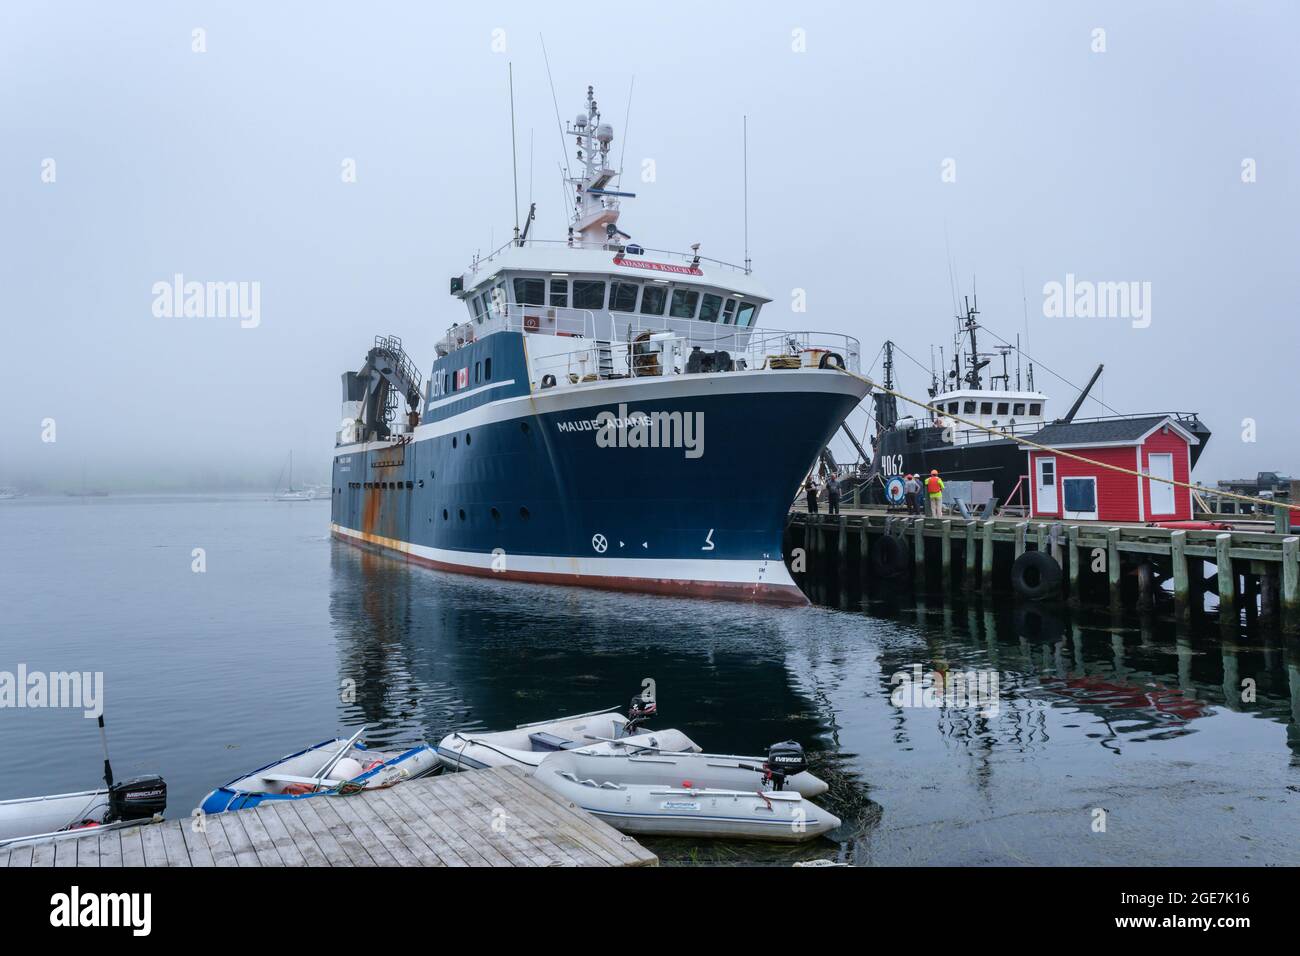 Lunenburg, Nova Scotia, Canada - 12 August 2021: Fishing ship moored at Lunenburg docks Stock Photo